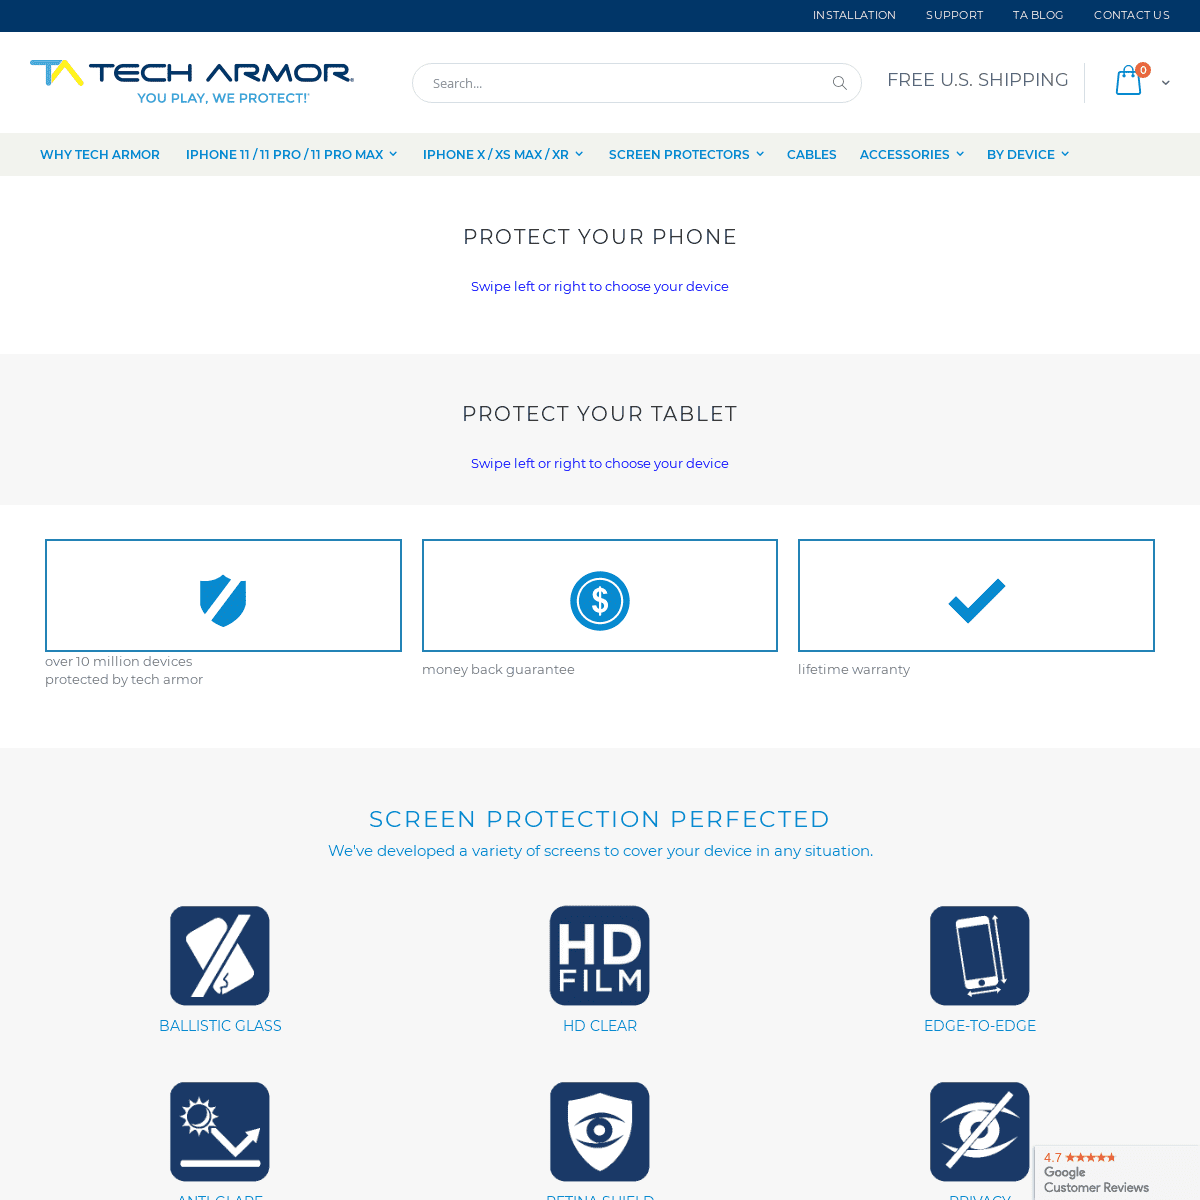 A complete backup of techarmor.com